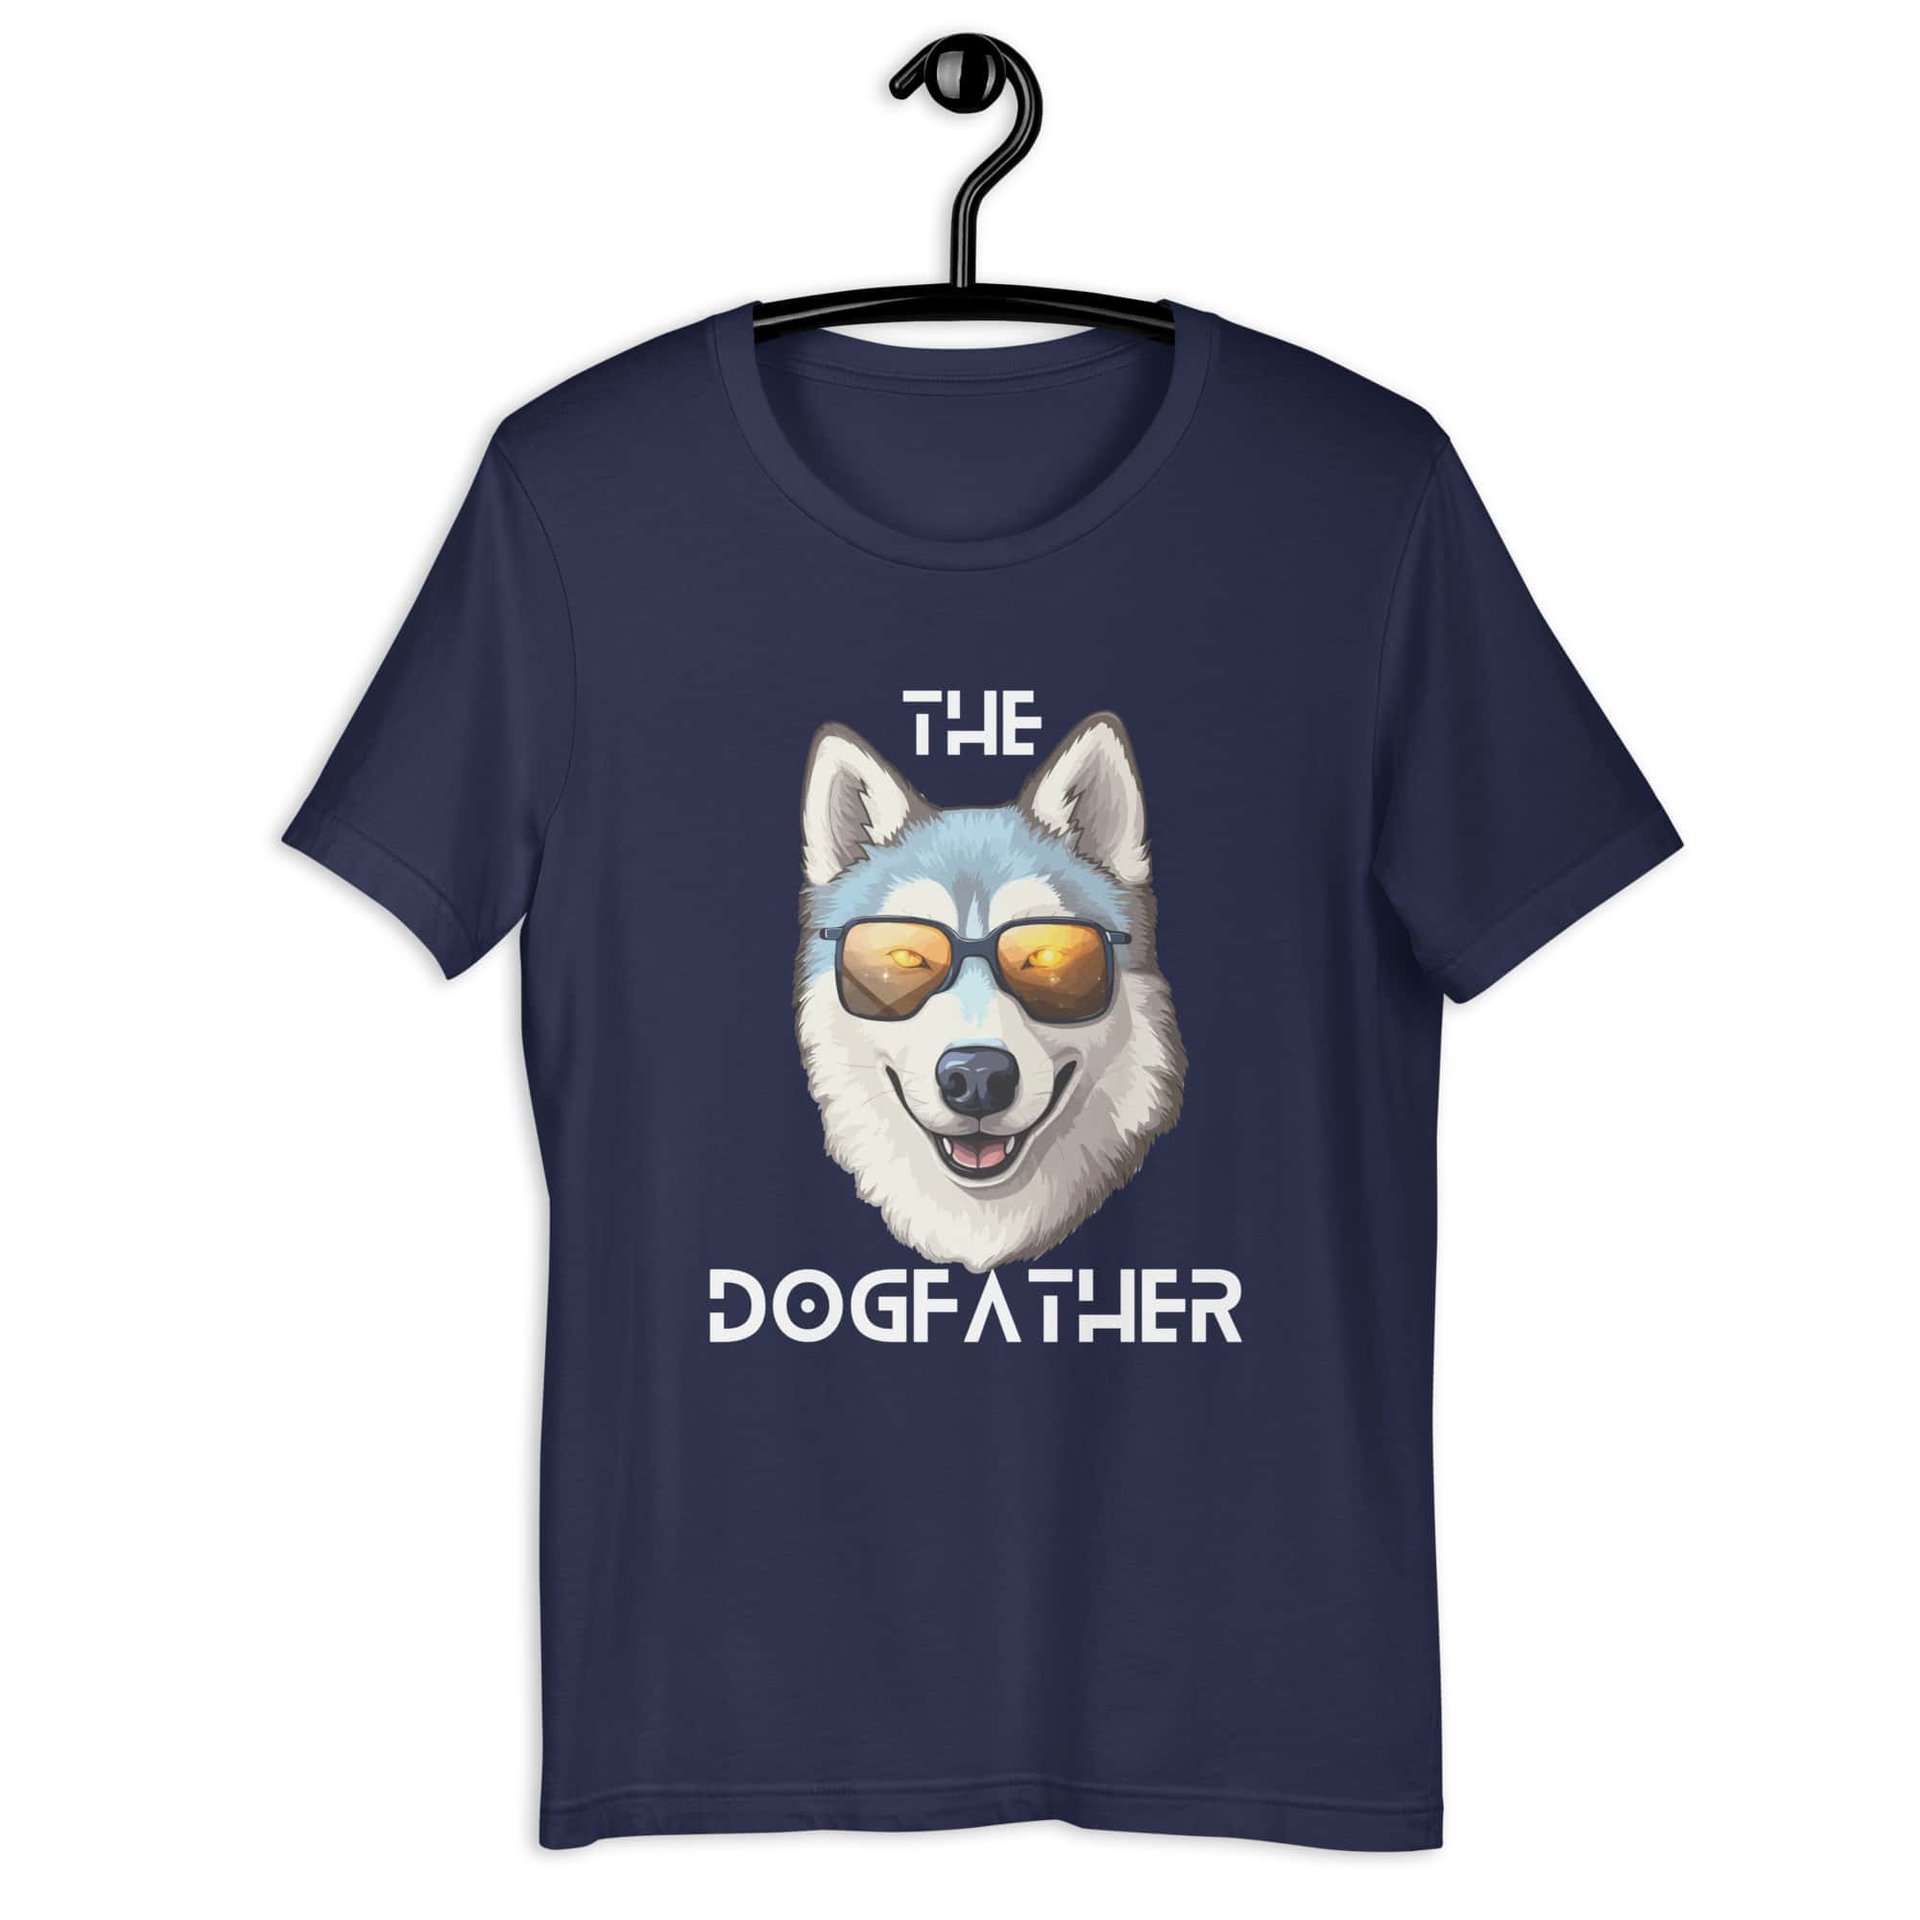 The Dogfather Huskies Unisex T-Shirt. Navy